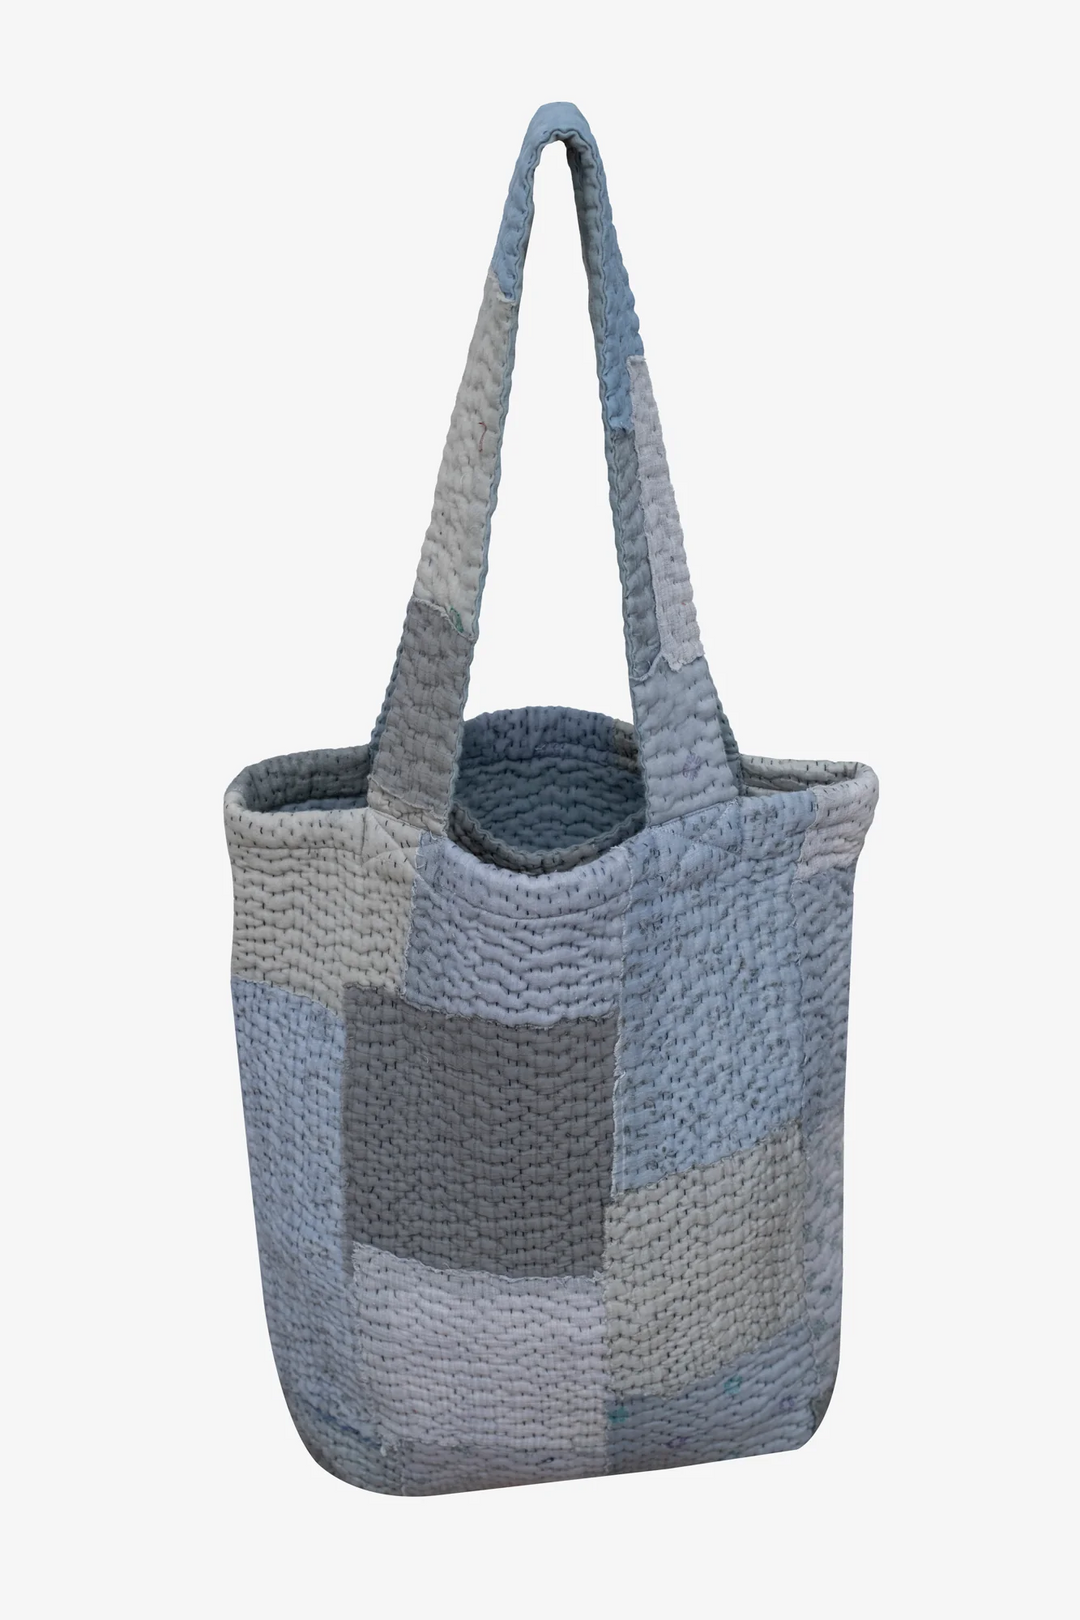 Mosaic Fray Handmade Vintage Kantha Tote Bag -Hydrengea -